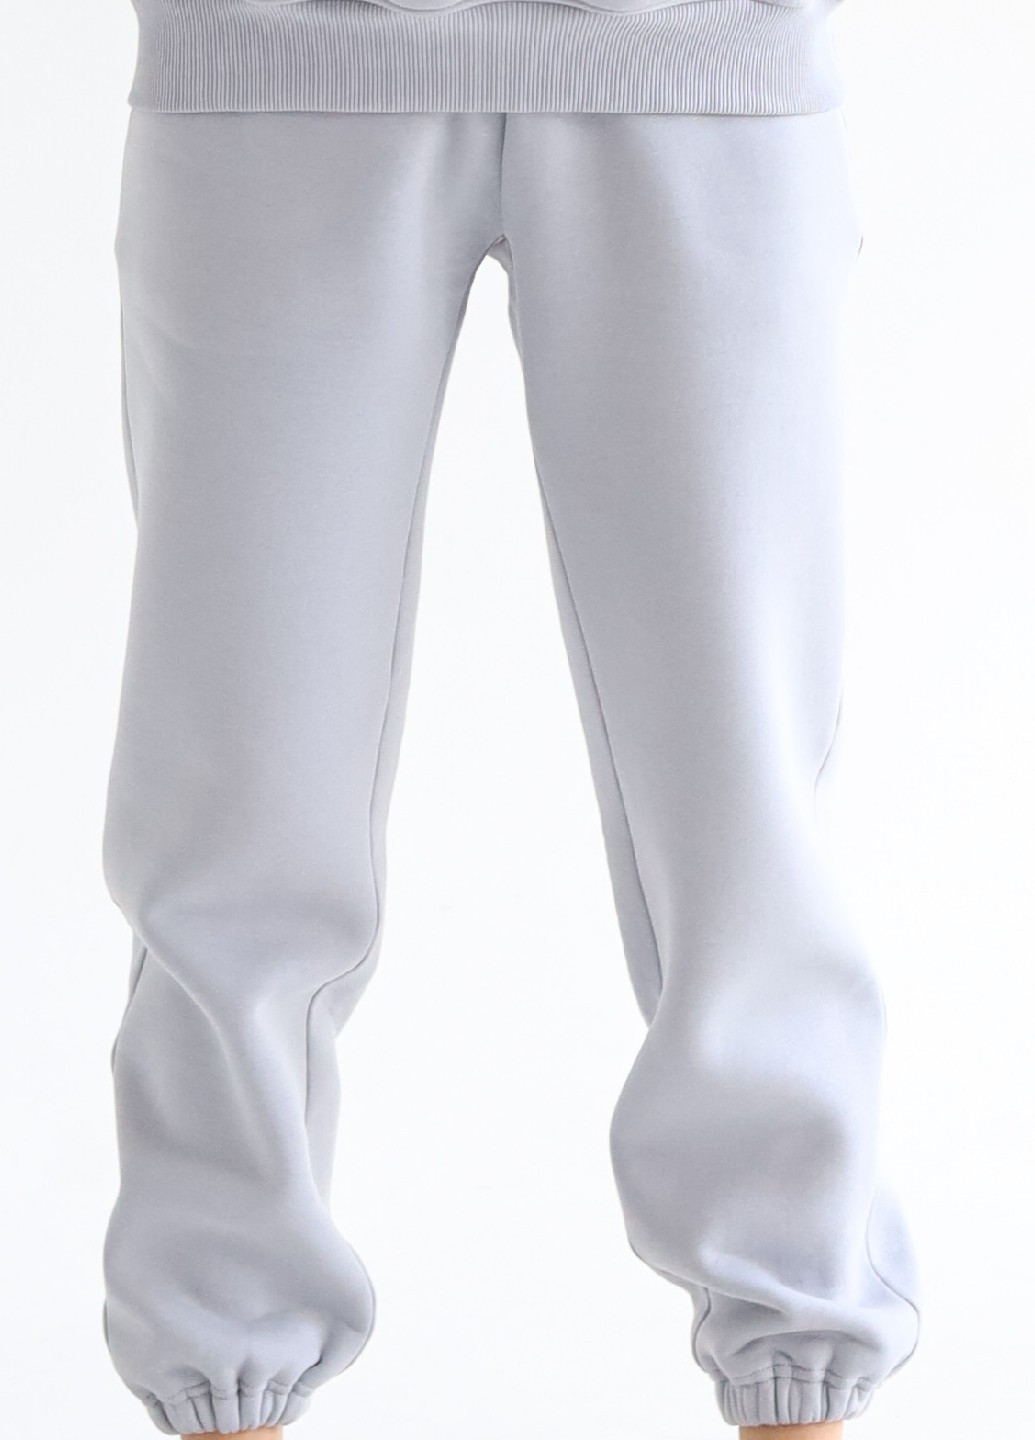 Women's Cotton Jogger Pants with Fleece | Grey color | Made in Ukraine | Rebellis